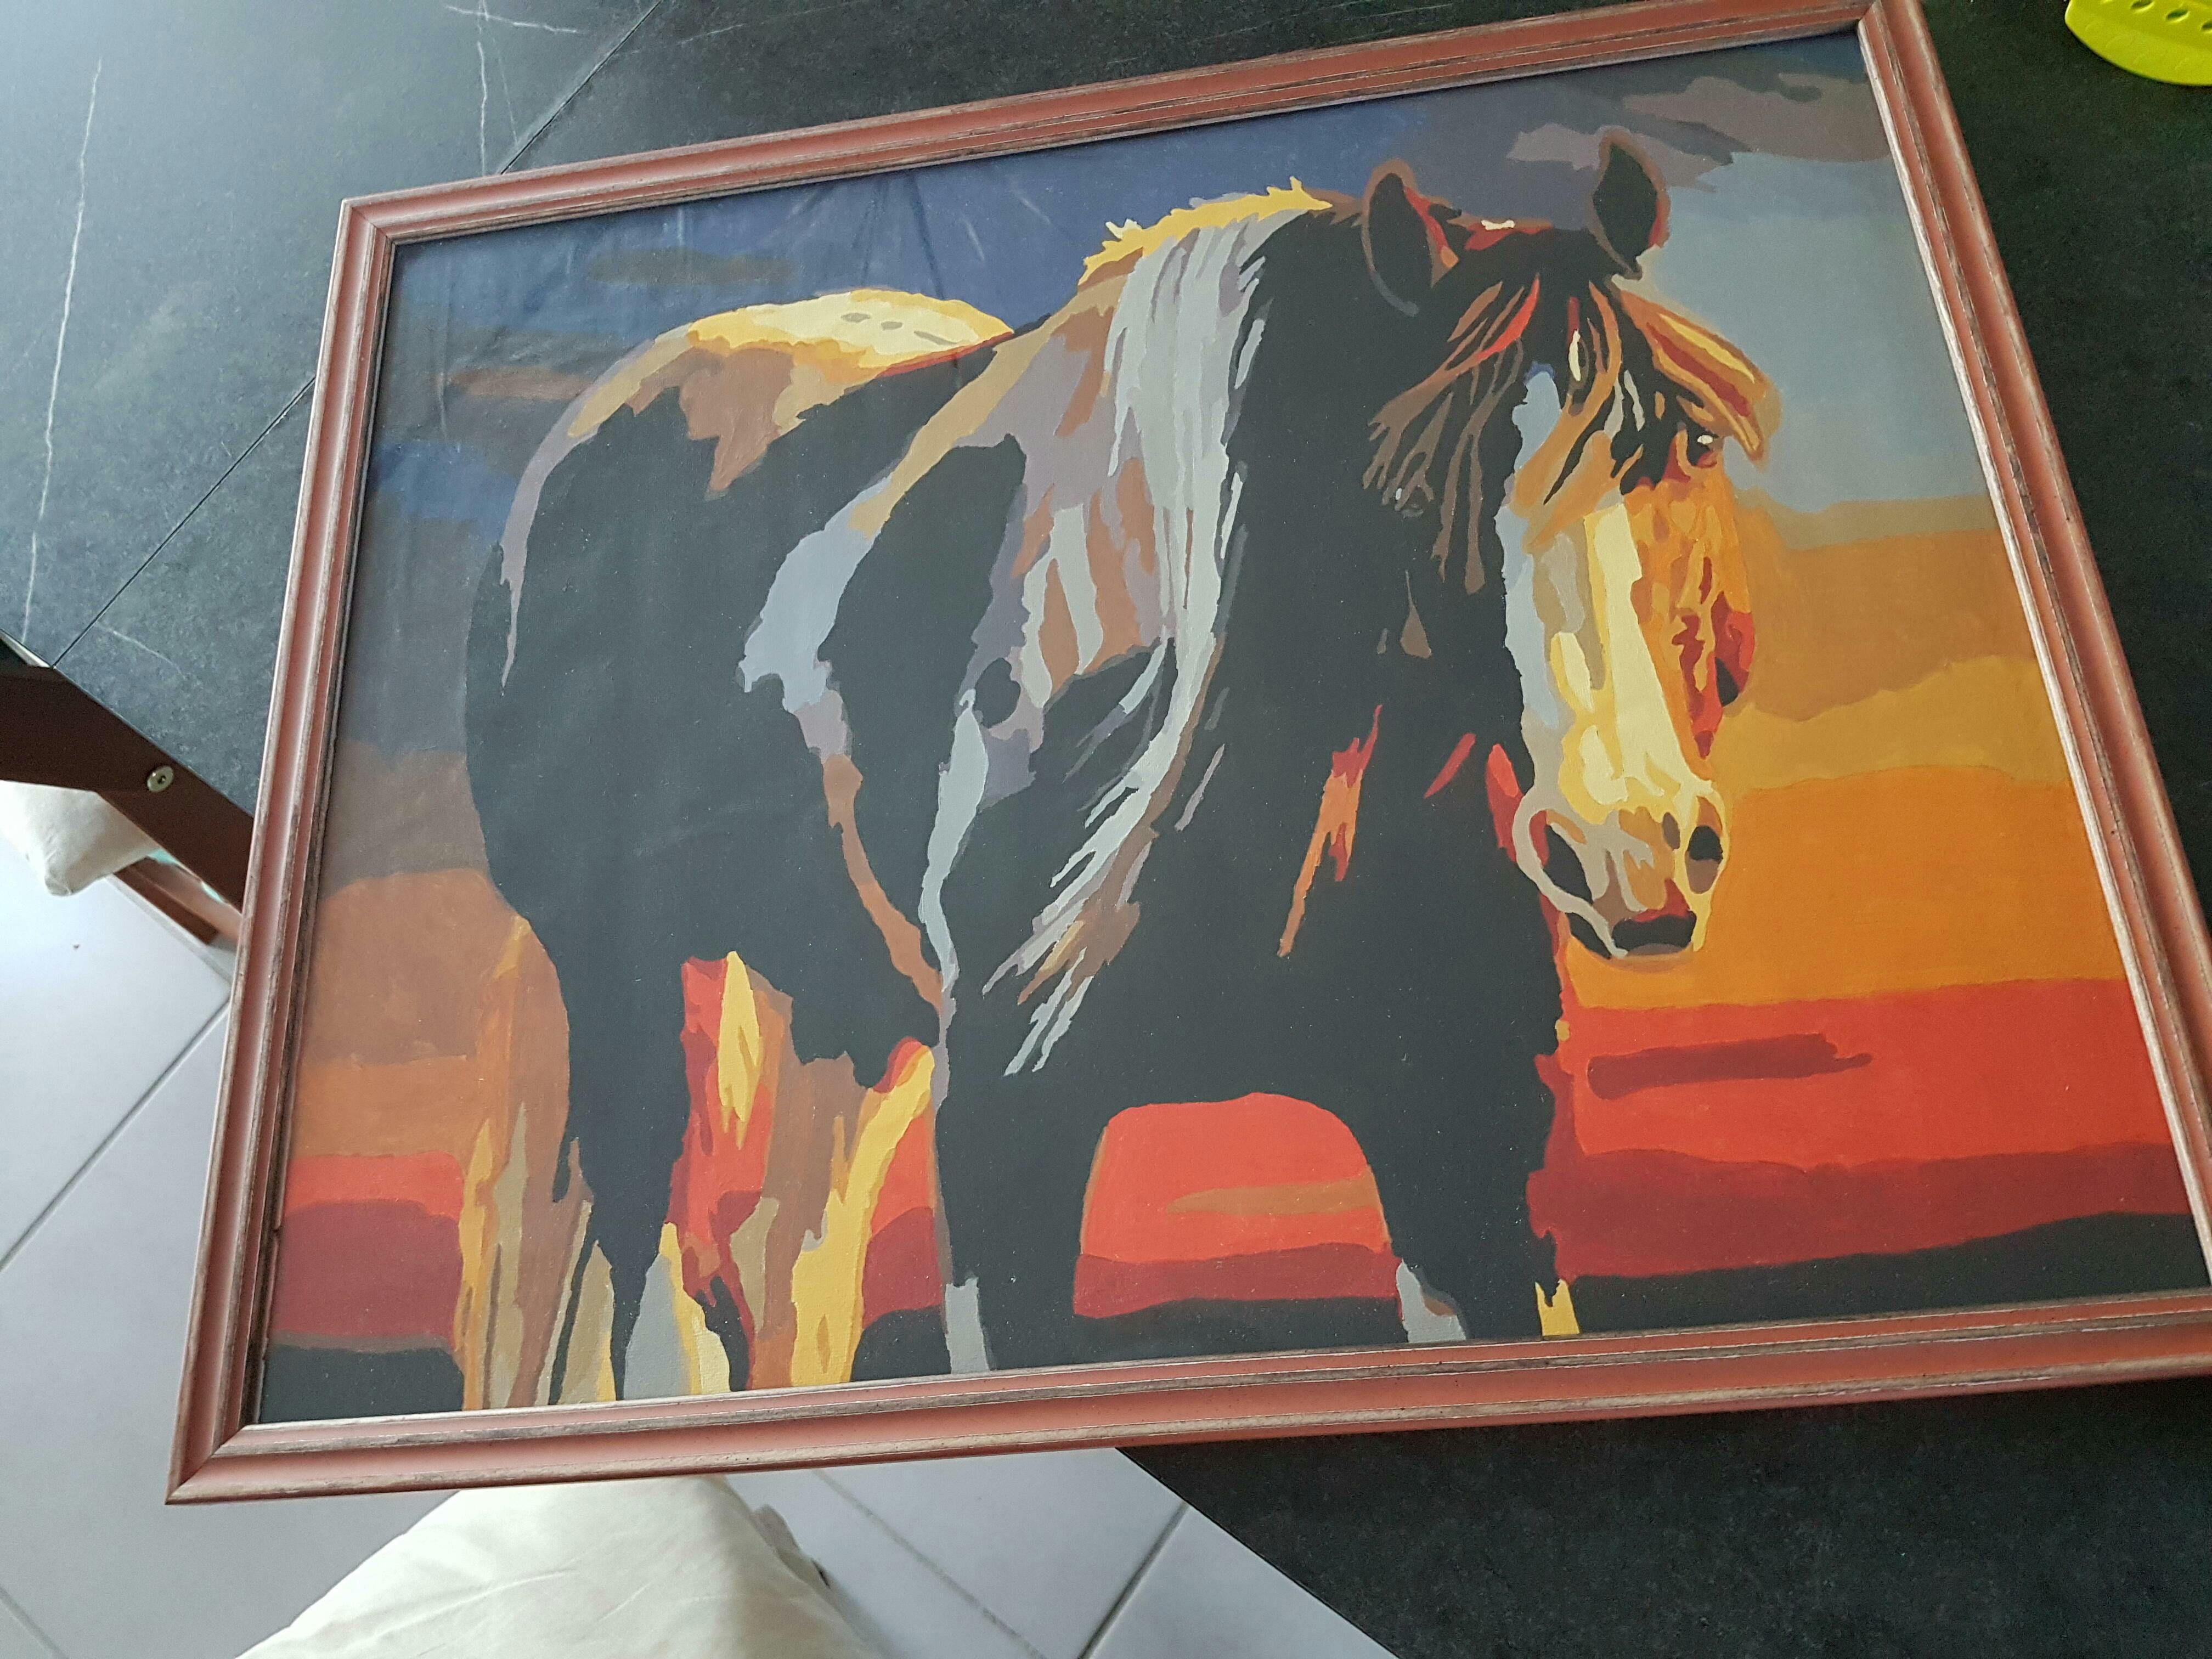 Diamond Painting - Horse at Dusk – Figured'Art